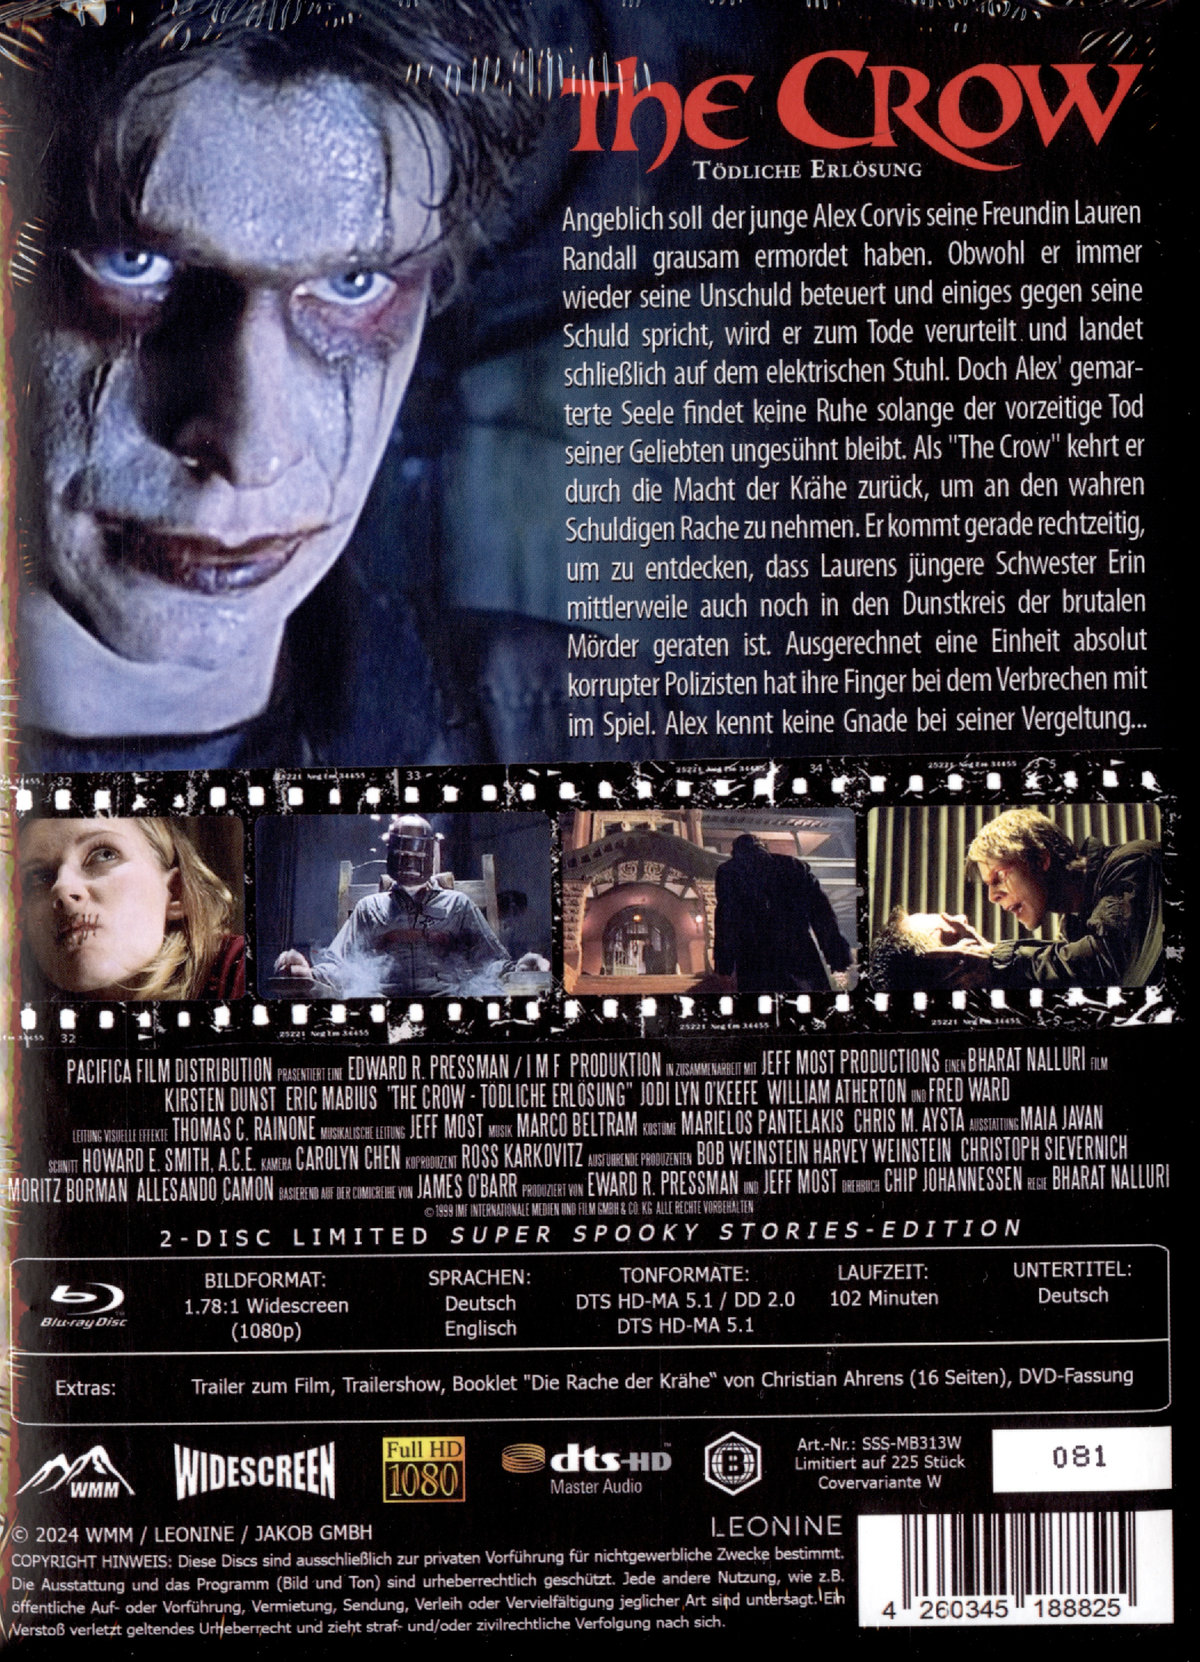 The Crow 3 - Tödliche Erlösung - Uncut Mediabook Edition  (DVD+blu-ray) (wattiert)